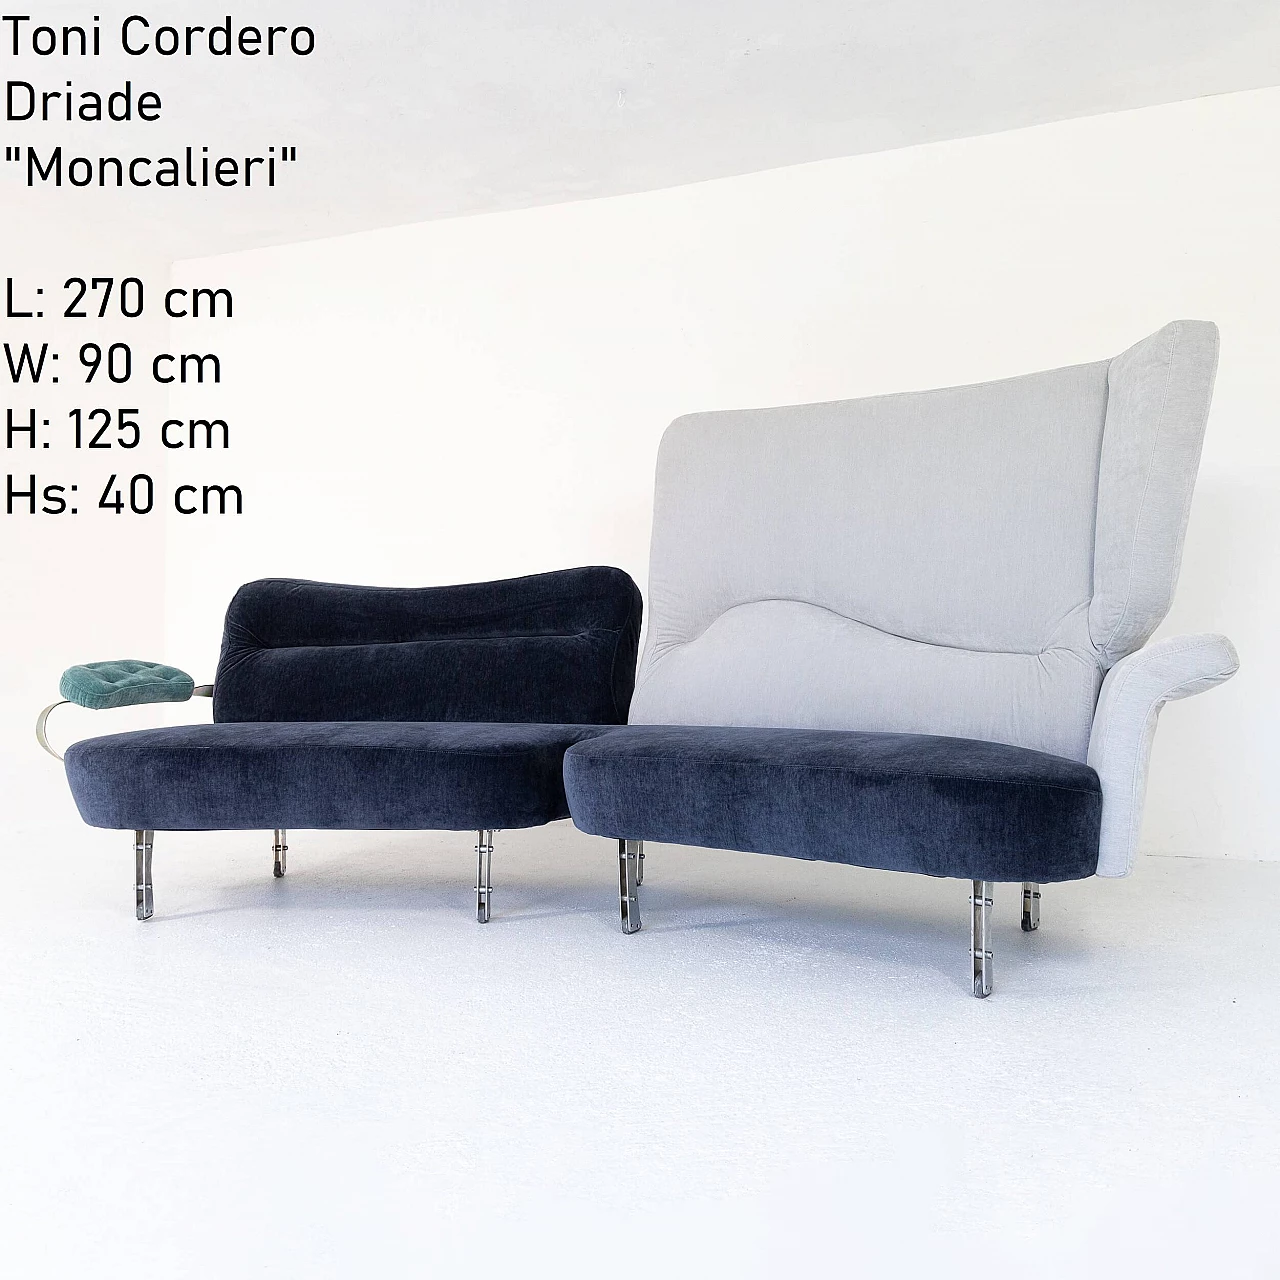 Moncalieri sofa by Toni Cordero for Driade, 1980s 5